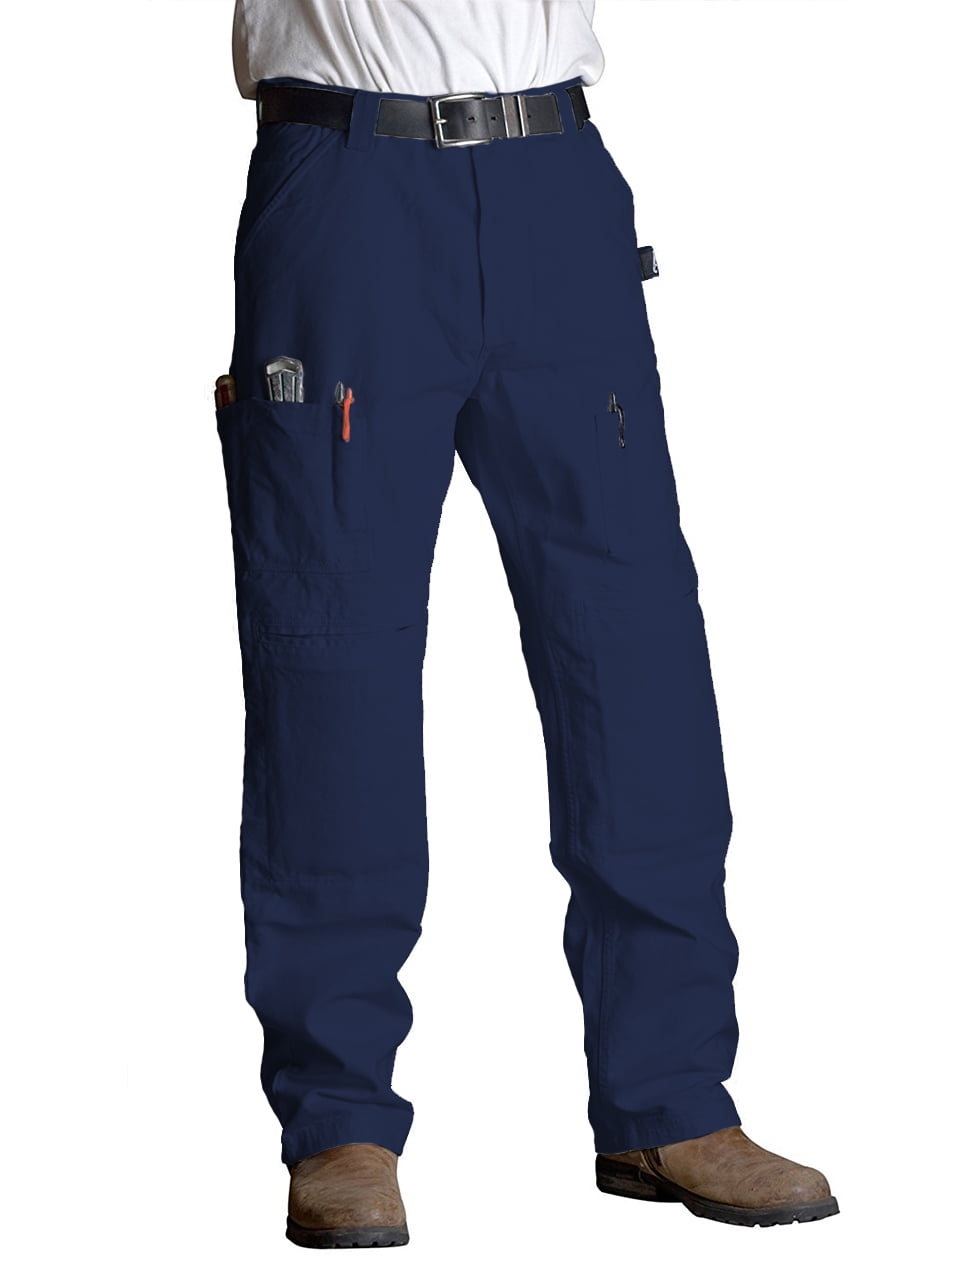 Work Wear Causal Top Knee Pad Uneek Cargo Trouser UC-904 Pockets Long 28-52 